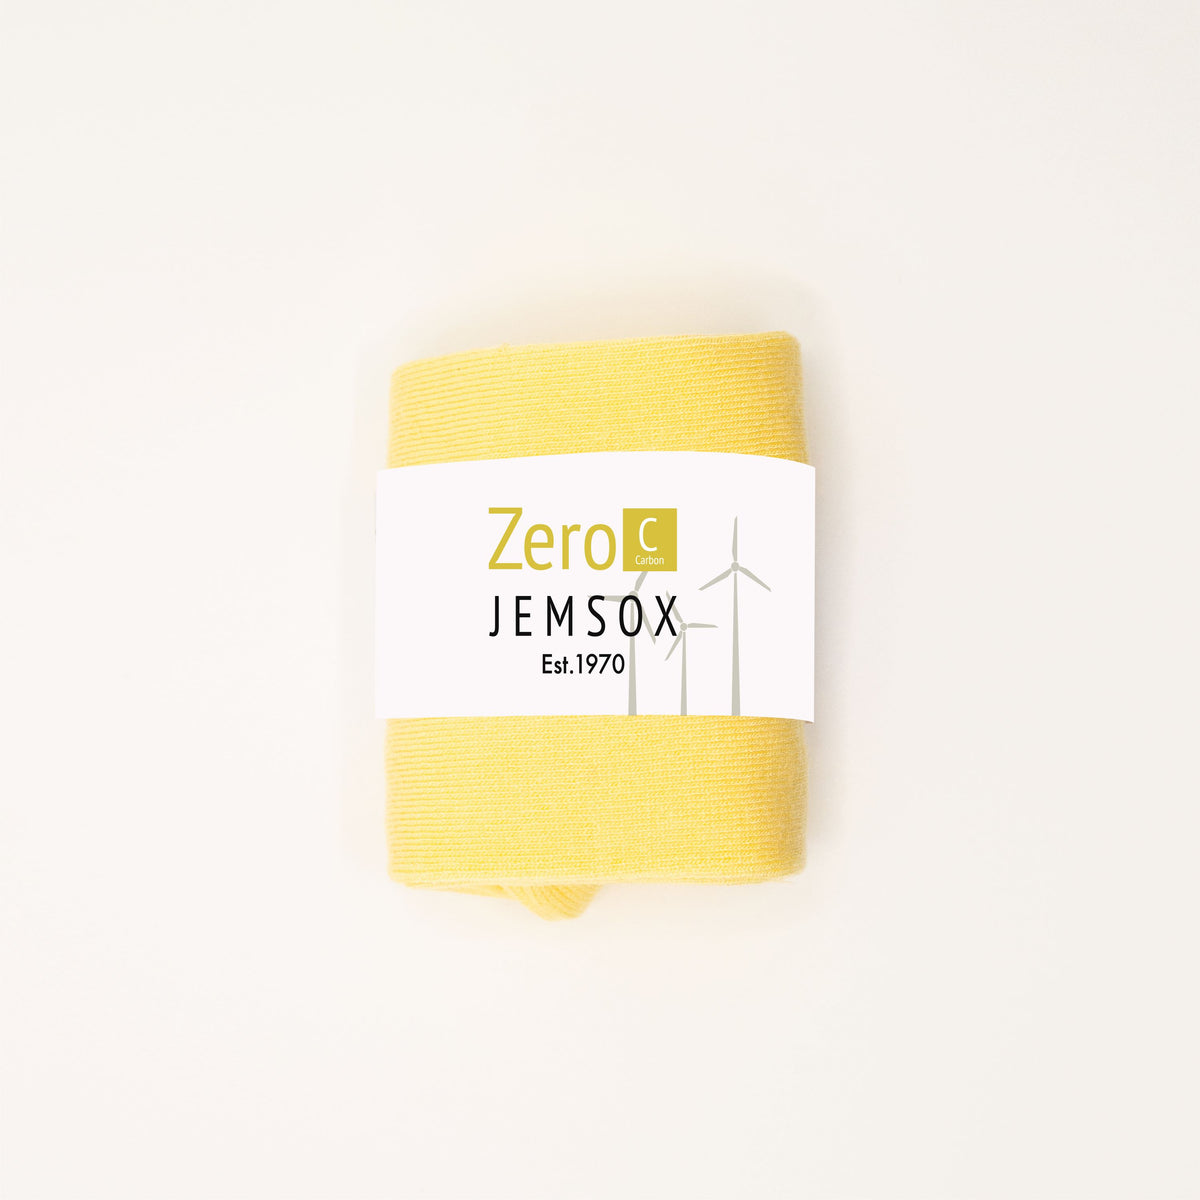 Carbon Zero - Lemon